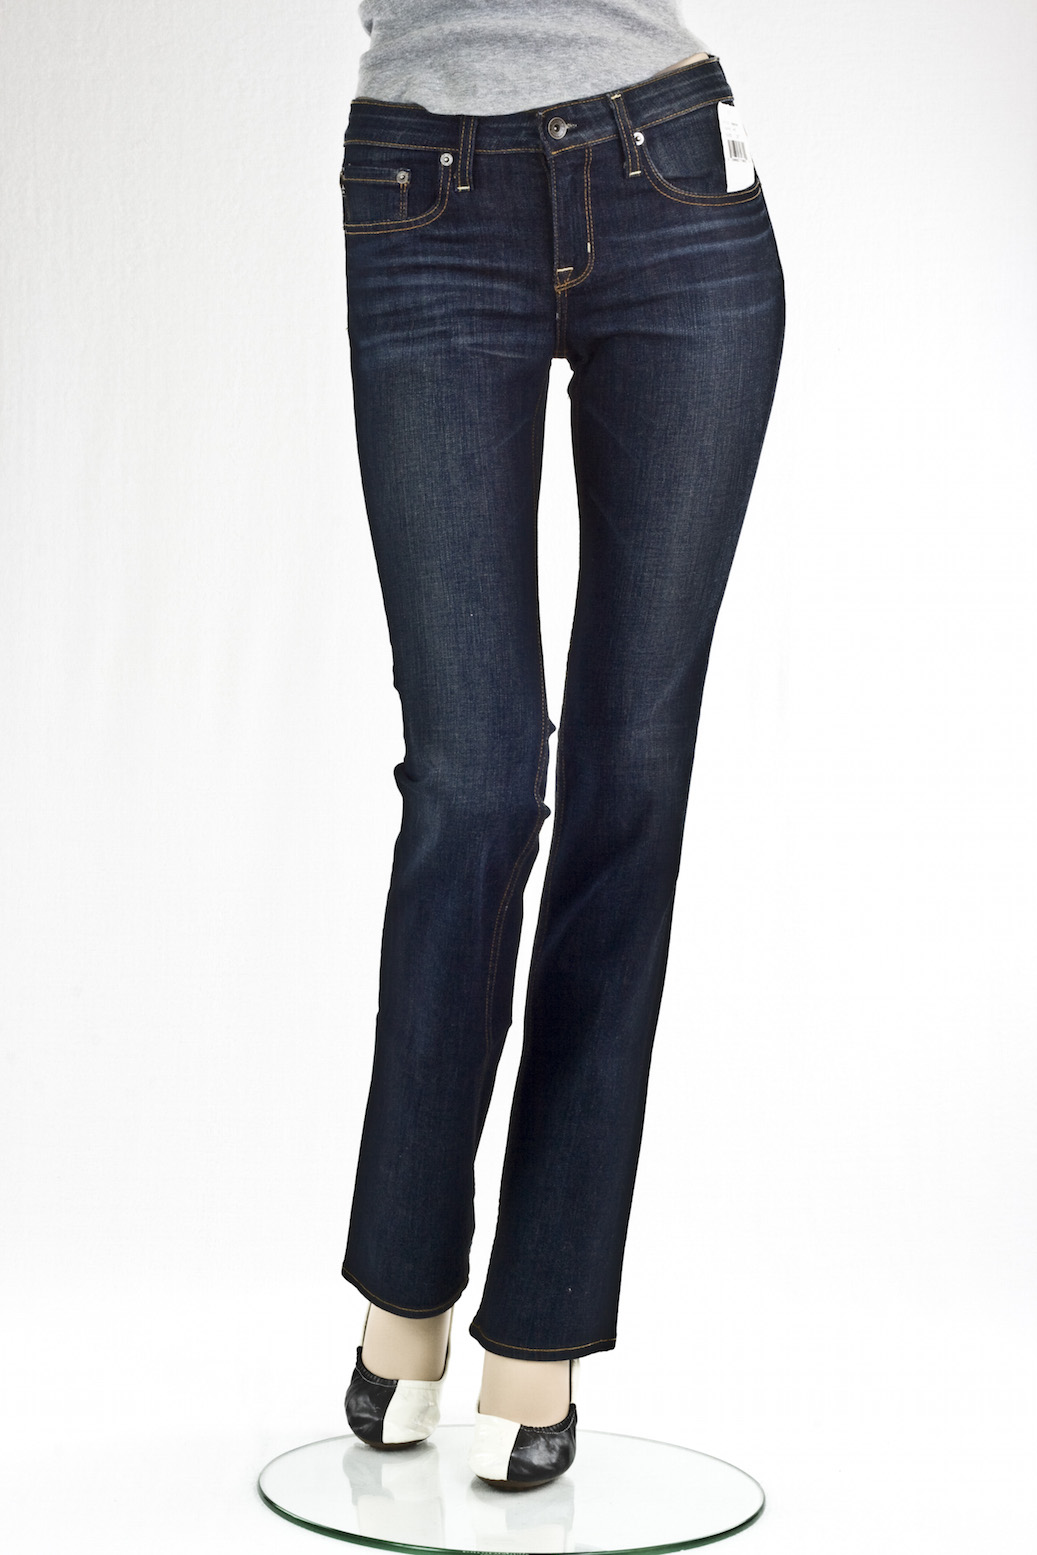 Женские джинсы Big Star "Буткат" Hazel Mid Rise Boot интернет-магазин Fashion Jeans